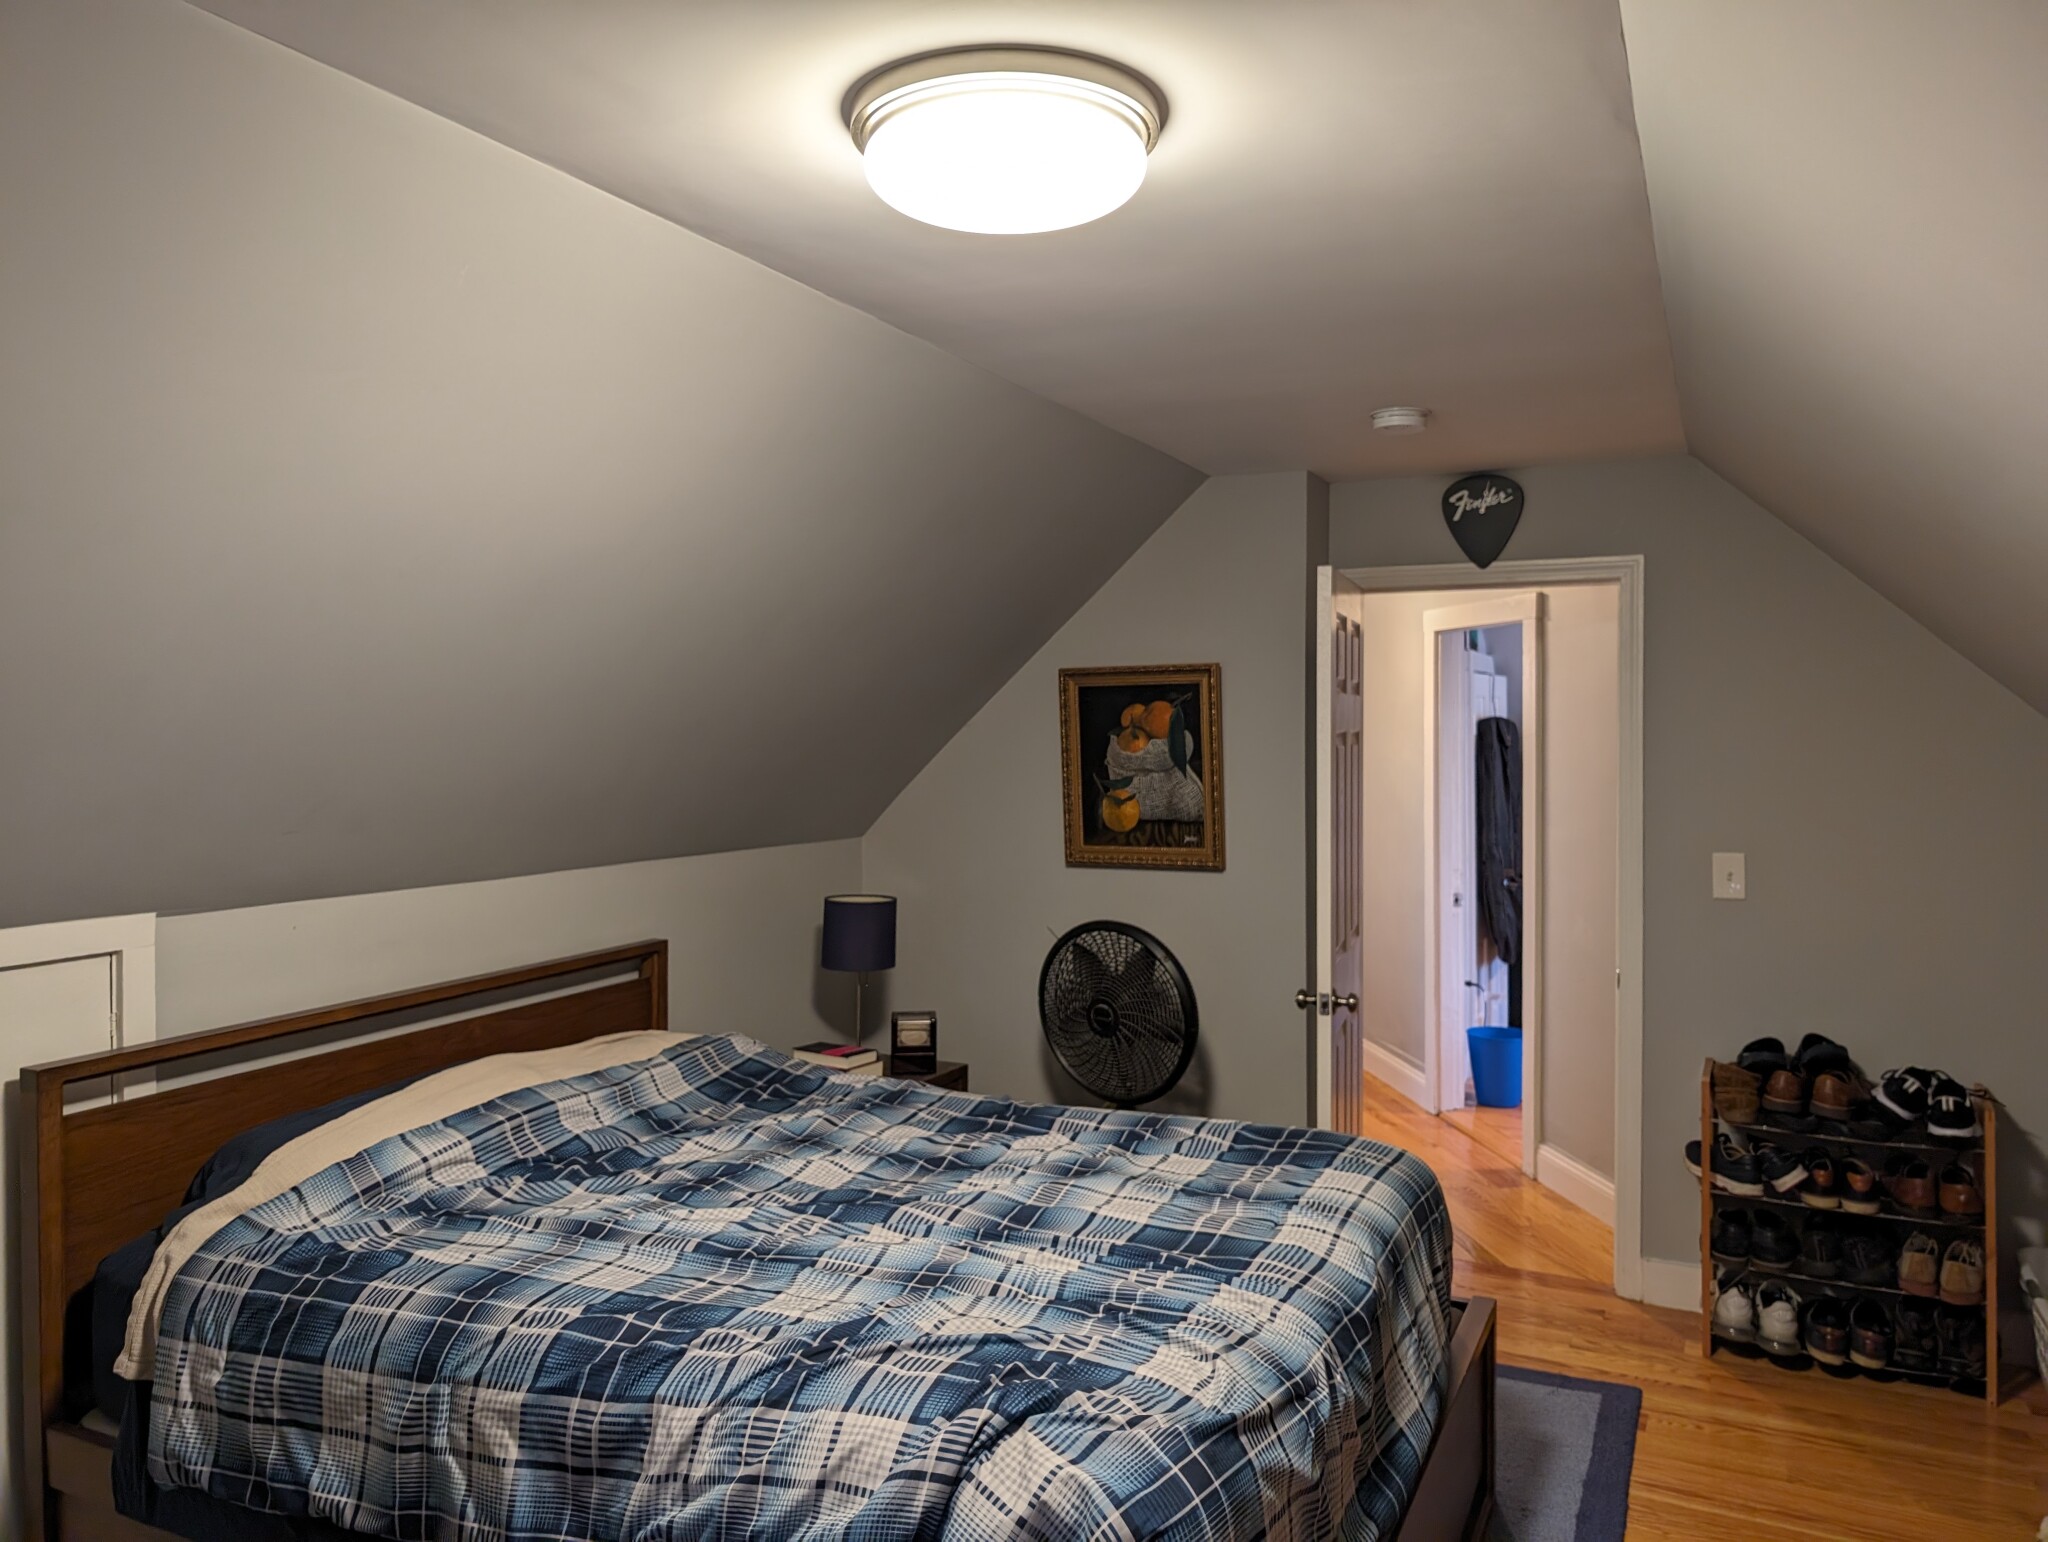 Photos of apartment on Kearney St.,Malden MA 02148